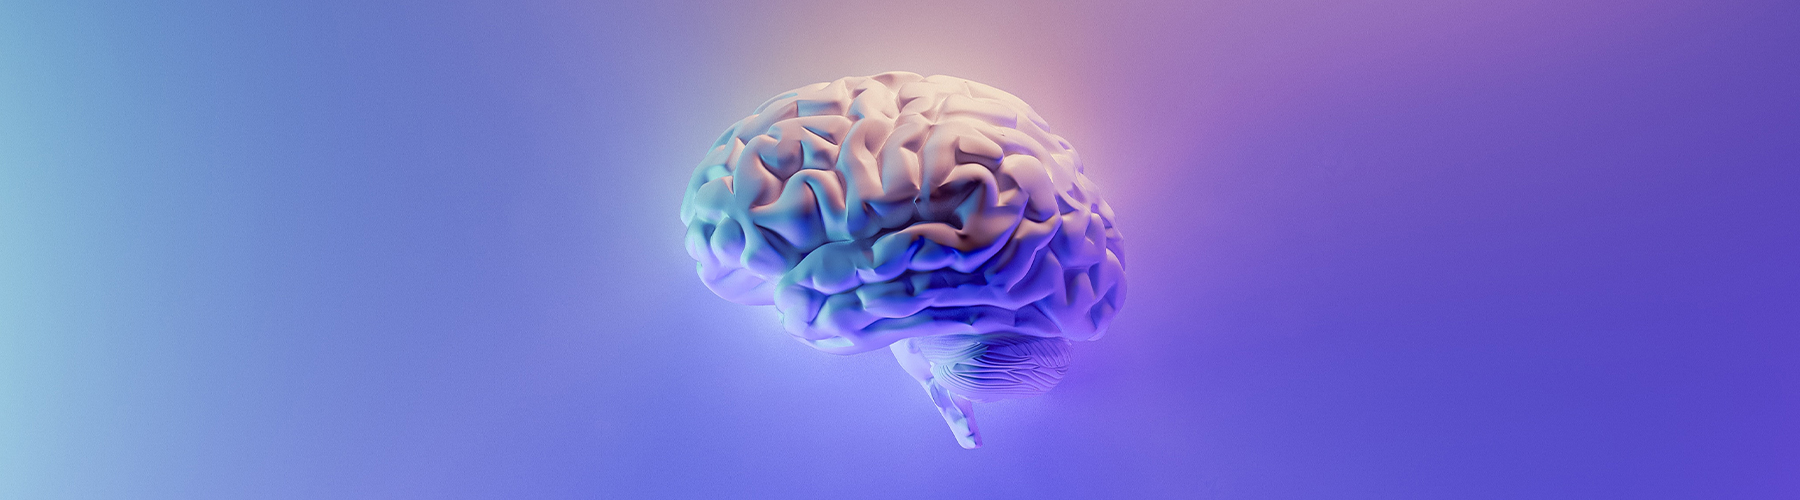 Illustration of a human brain